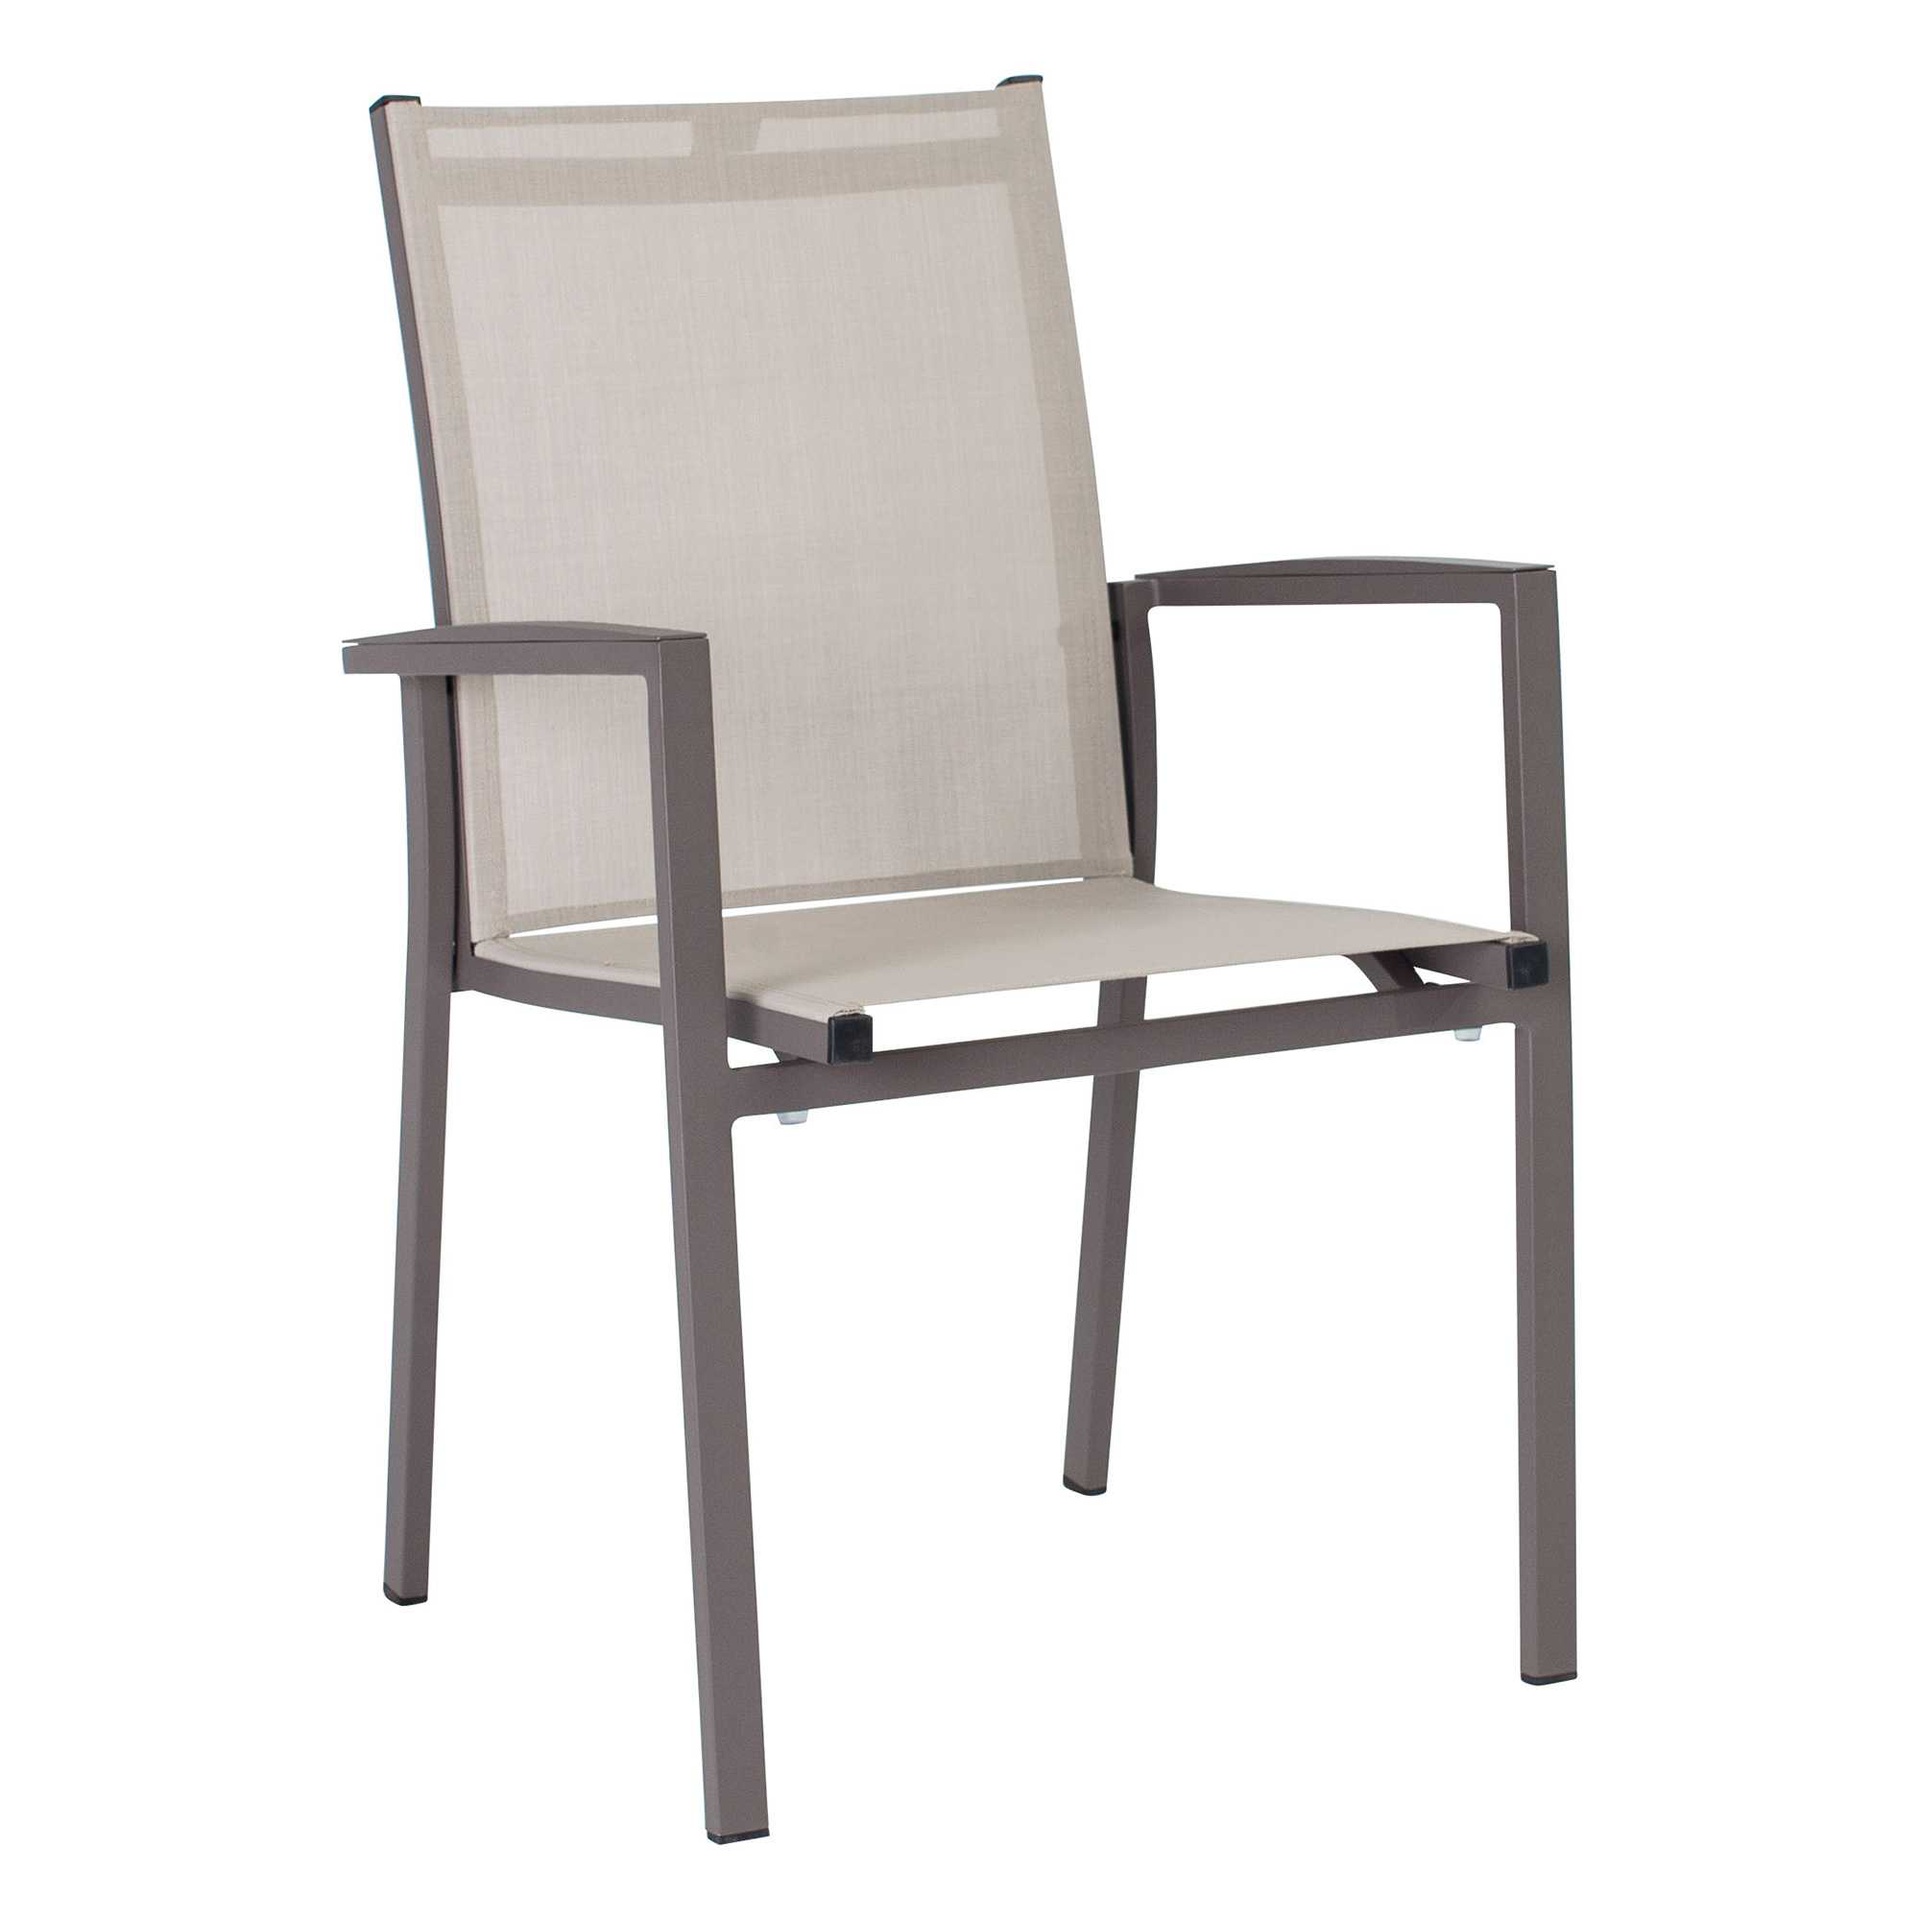 [STERN CHAISE JARDIN] Chaise de jardin en aluminium couleur taupe taupe  LEVANTO - STERN